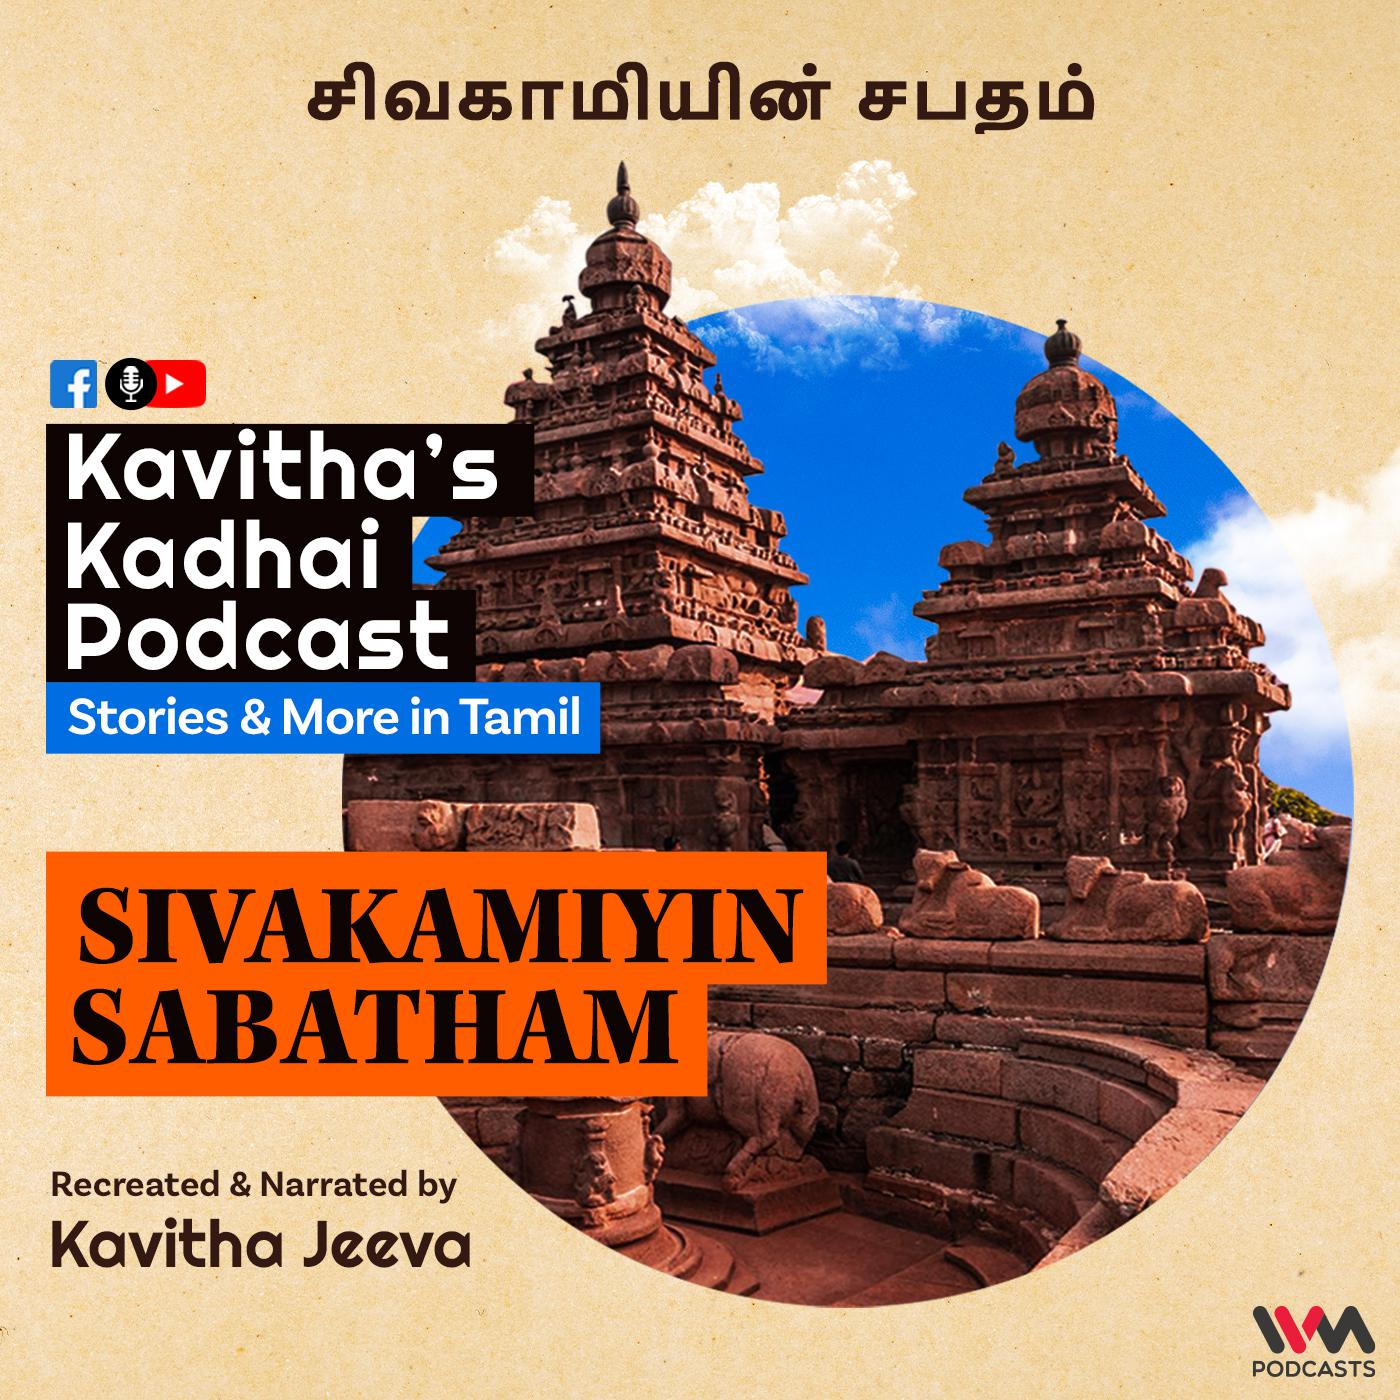 KadhaiPodcast's Sivakamiyin Sabatham with Kavitha Jeeva - Episode #134